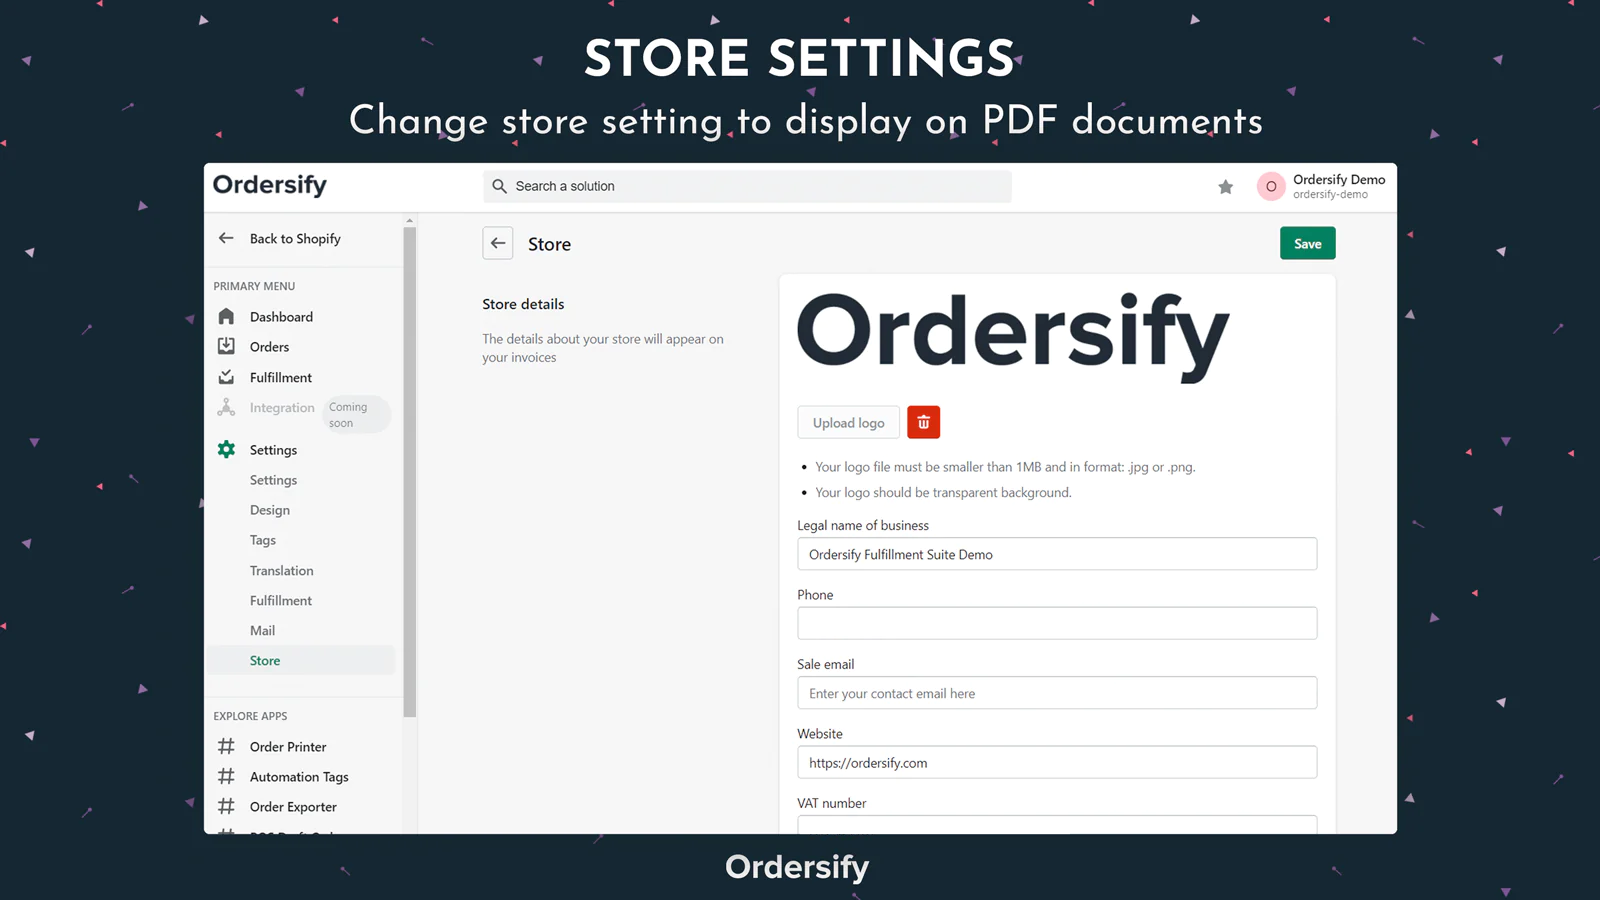 Store settings - Change store settings